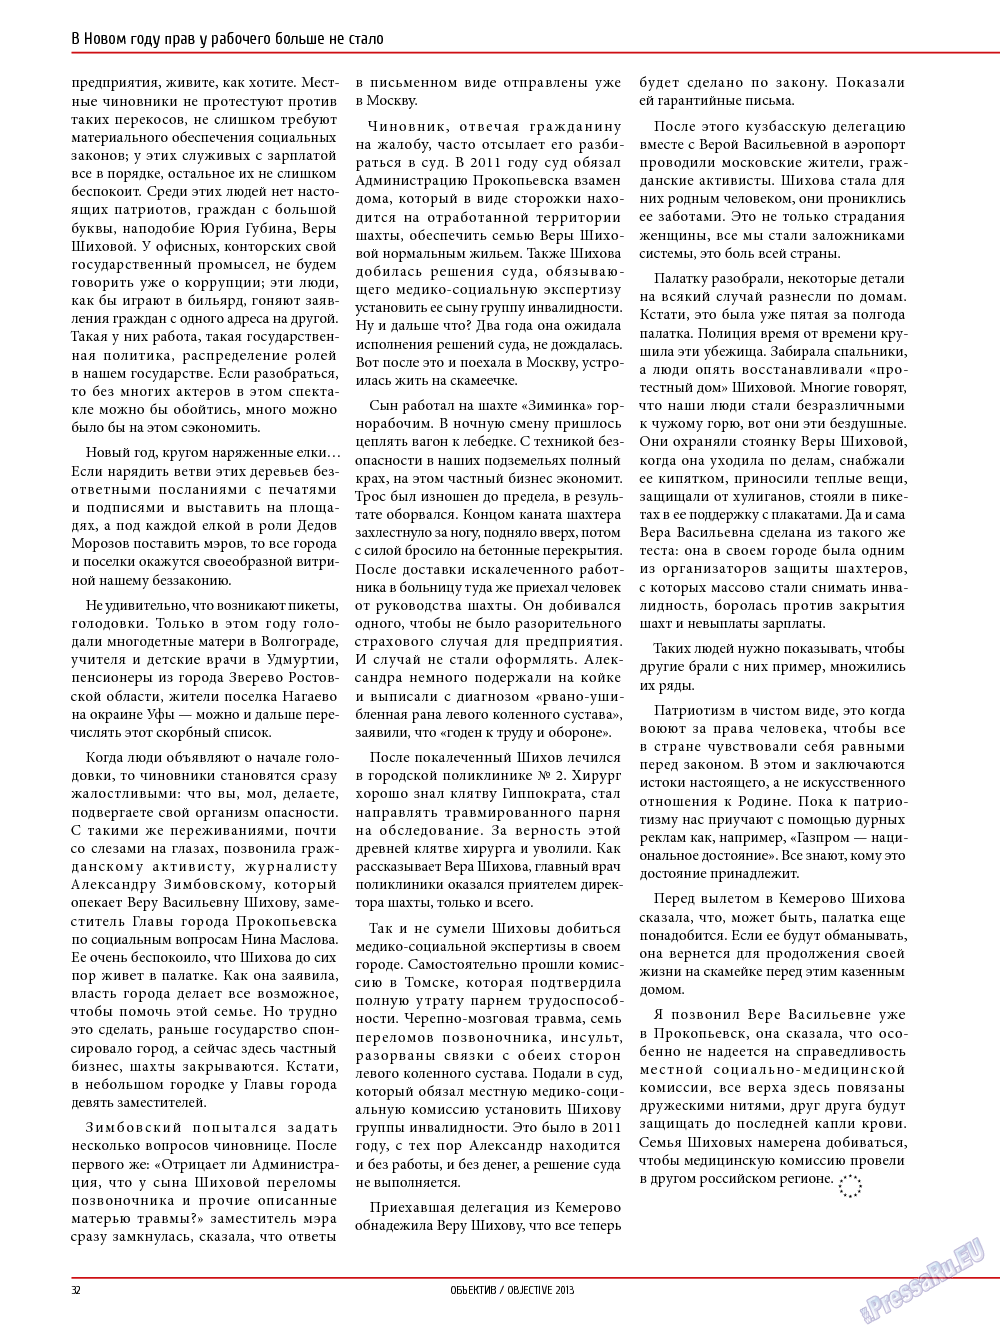 Объектив EU, журнал. 2014 №1 стр.32